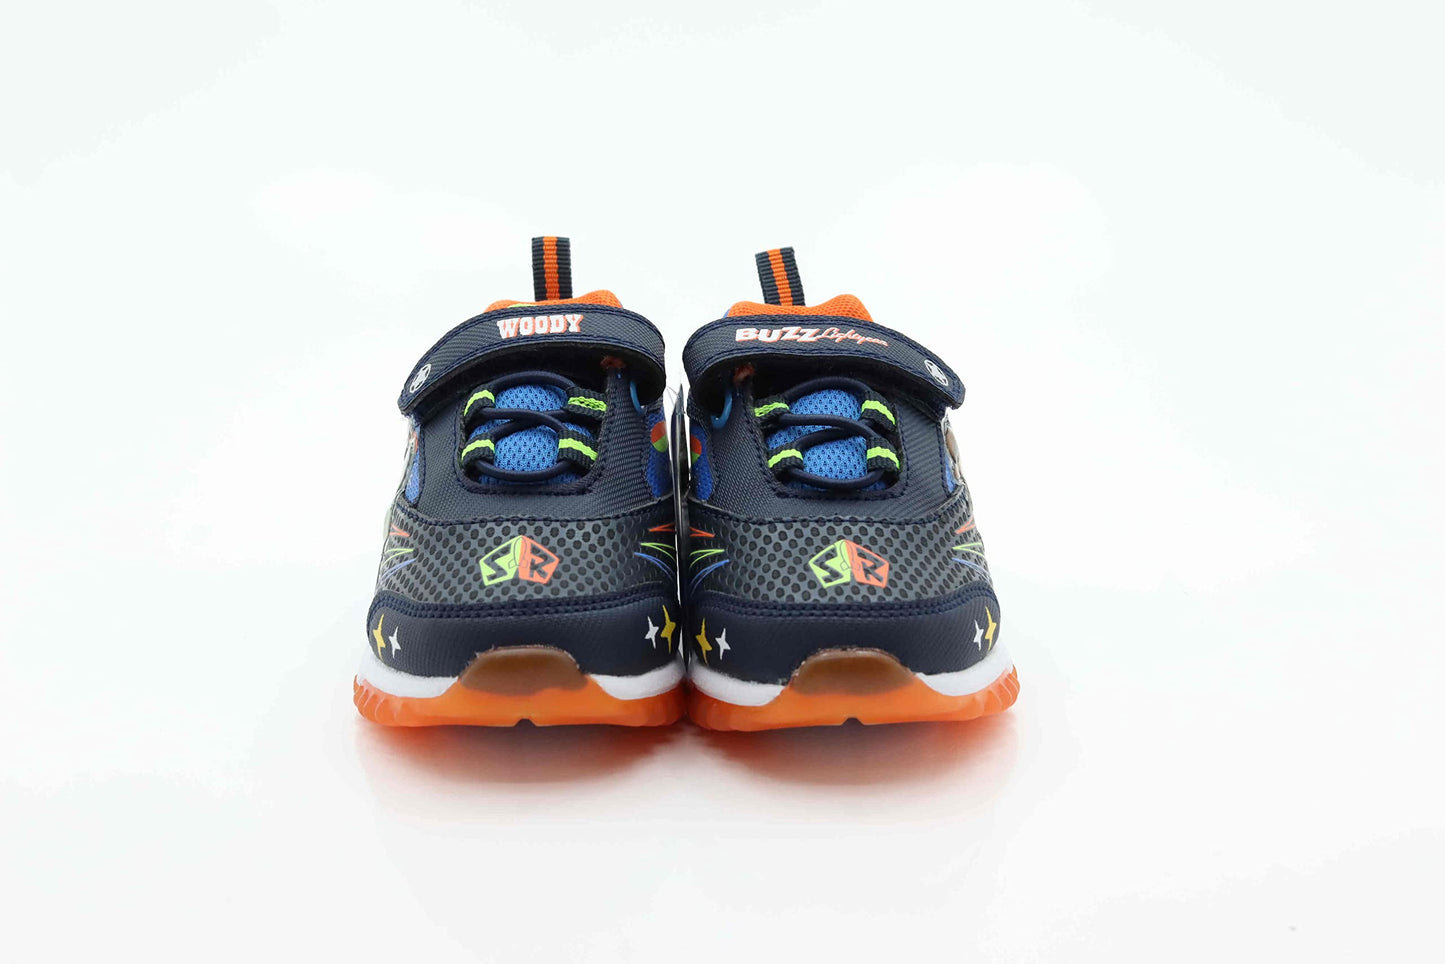 Disney Pixar Toy Story Boy's Lighted Athletic Sneaker, Blue/Orange (Toddler/Little Kid)